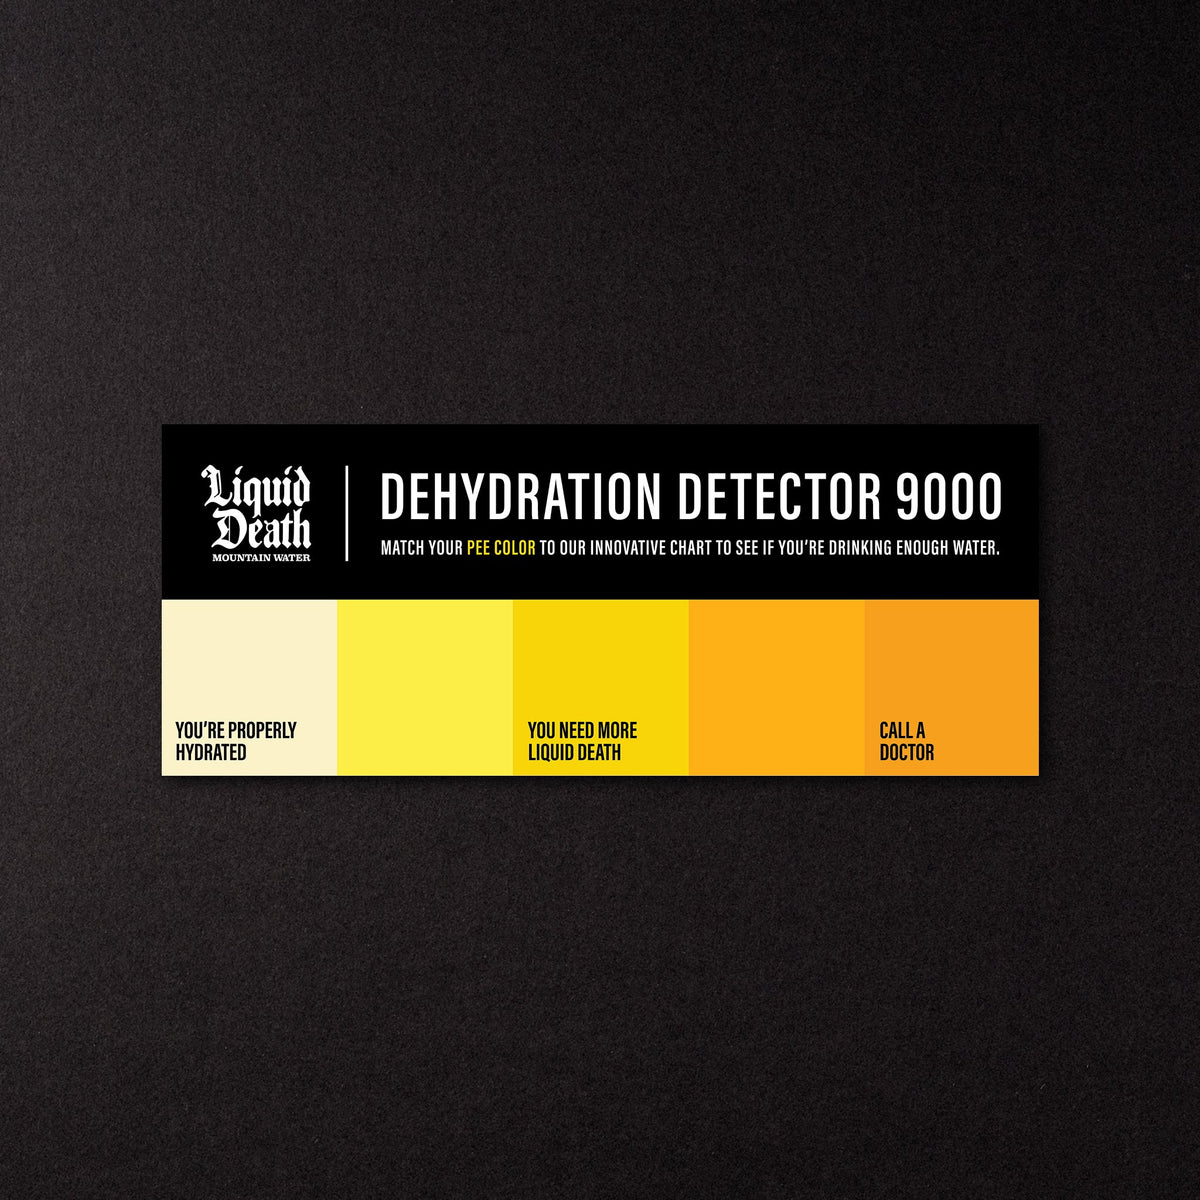 Dehydration Detector 9000